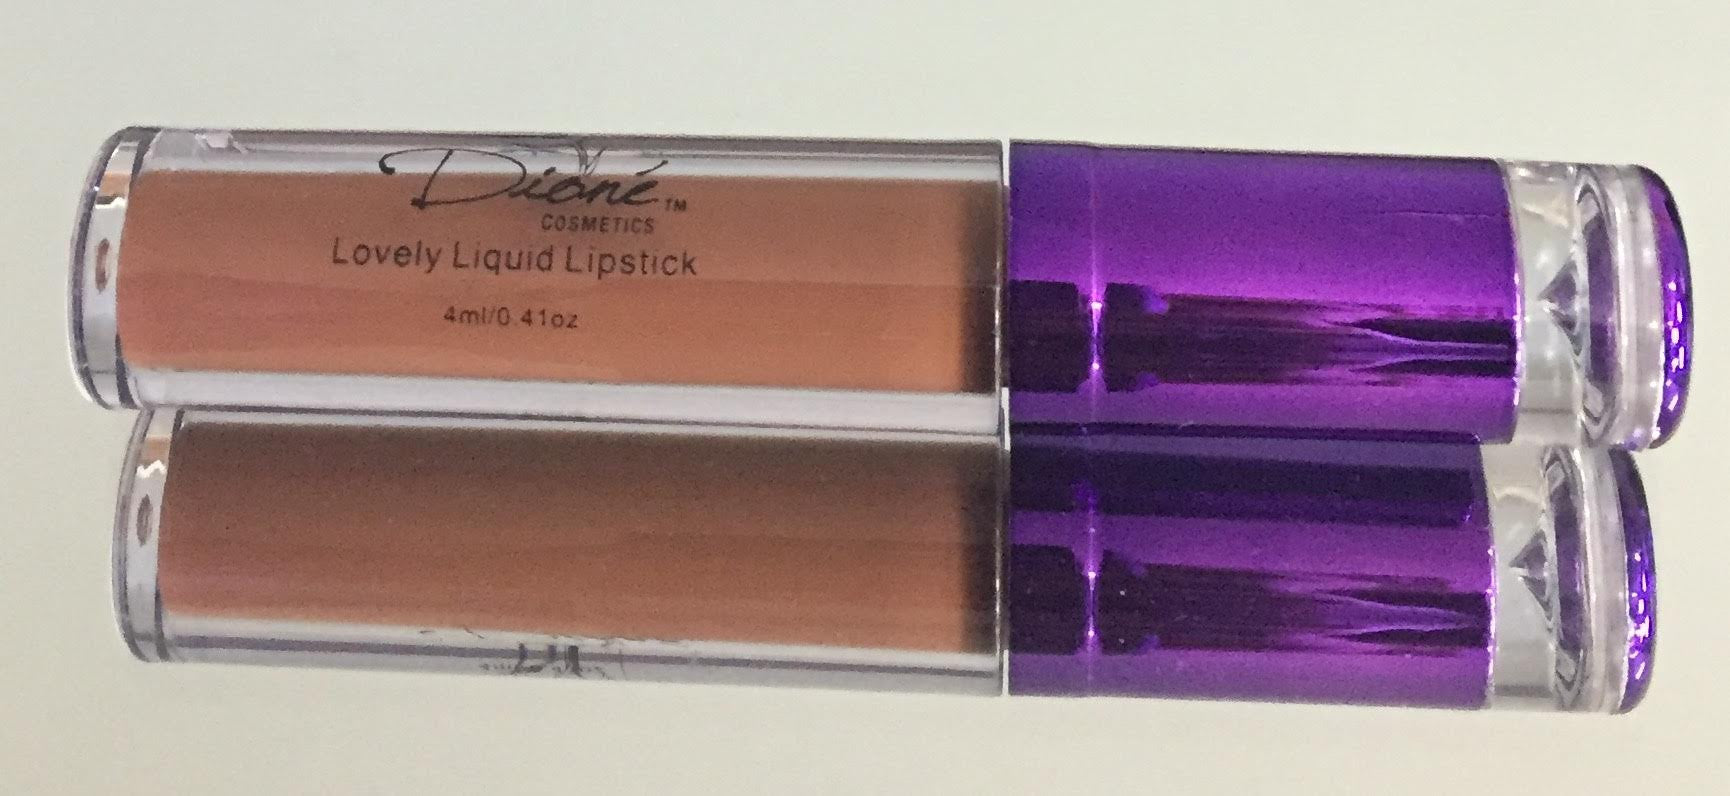 Lovely Liquid Lipsticks